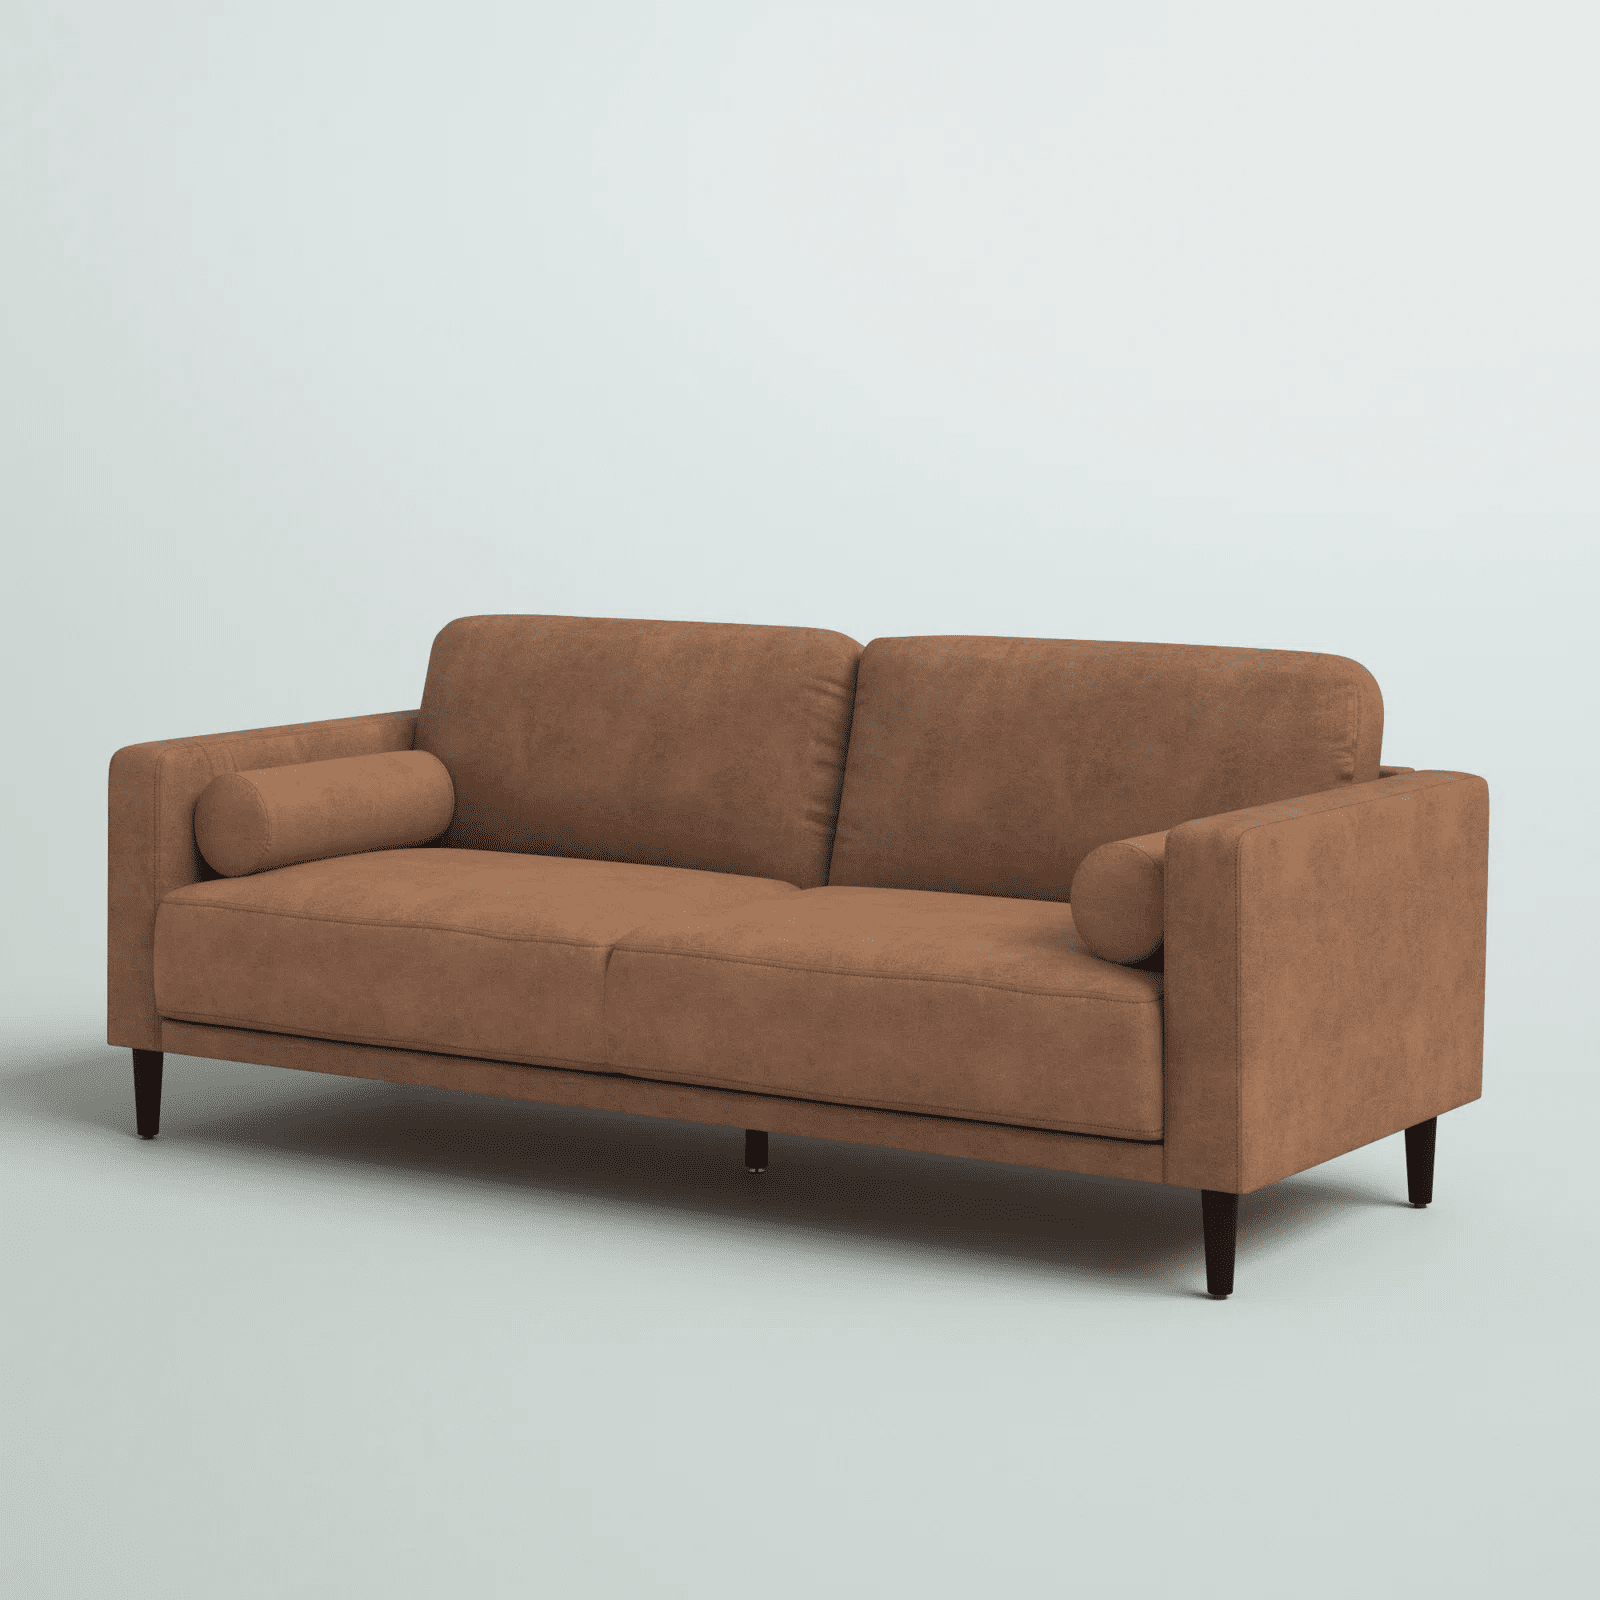 Homfa Modern 3-Seater Camel Sofa